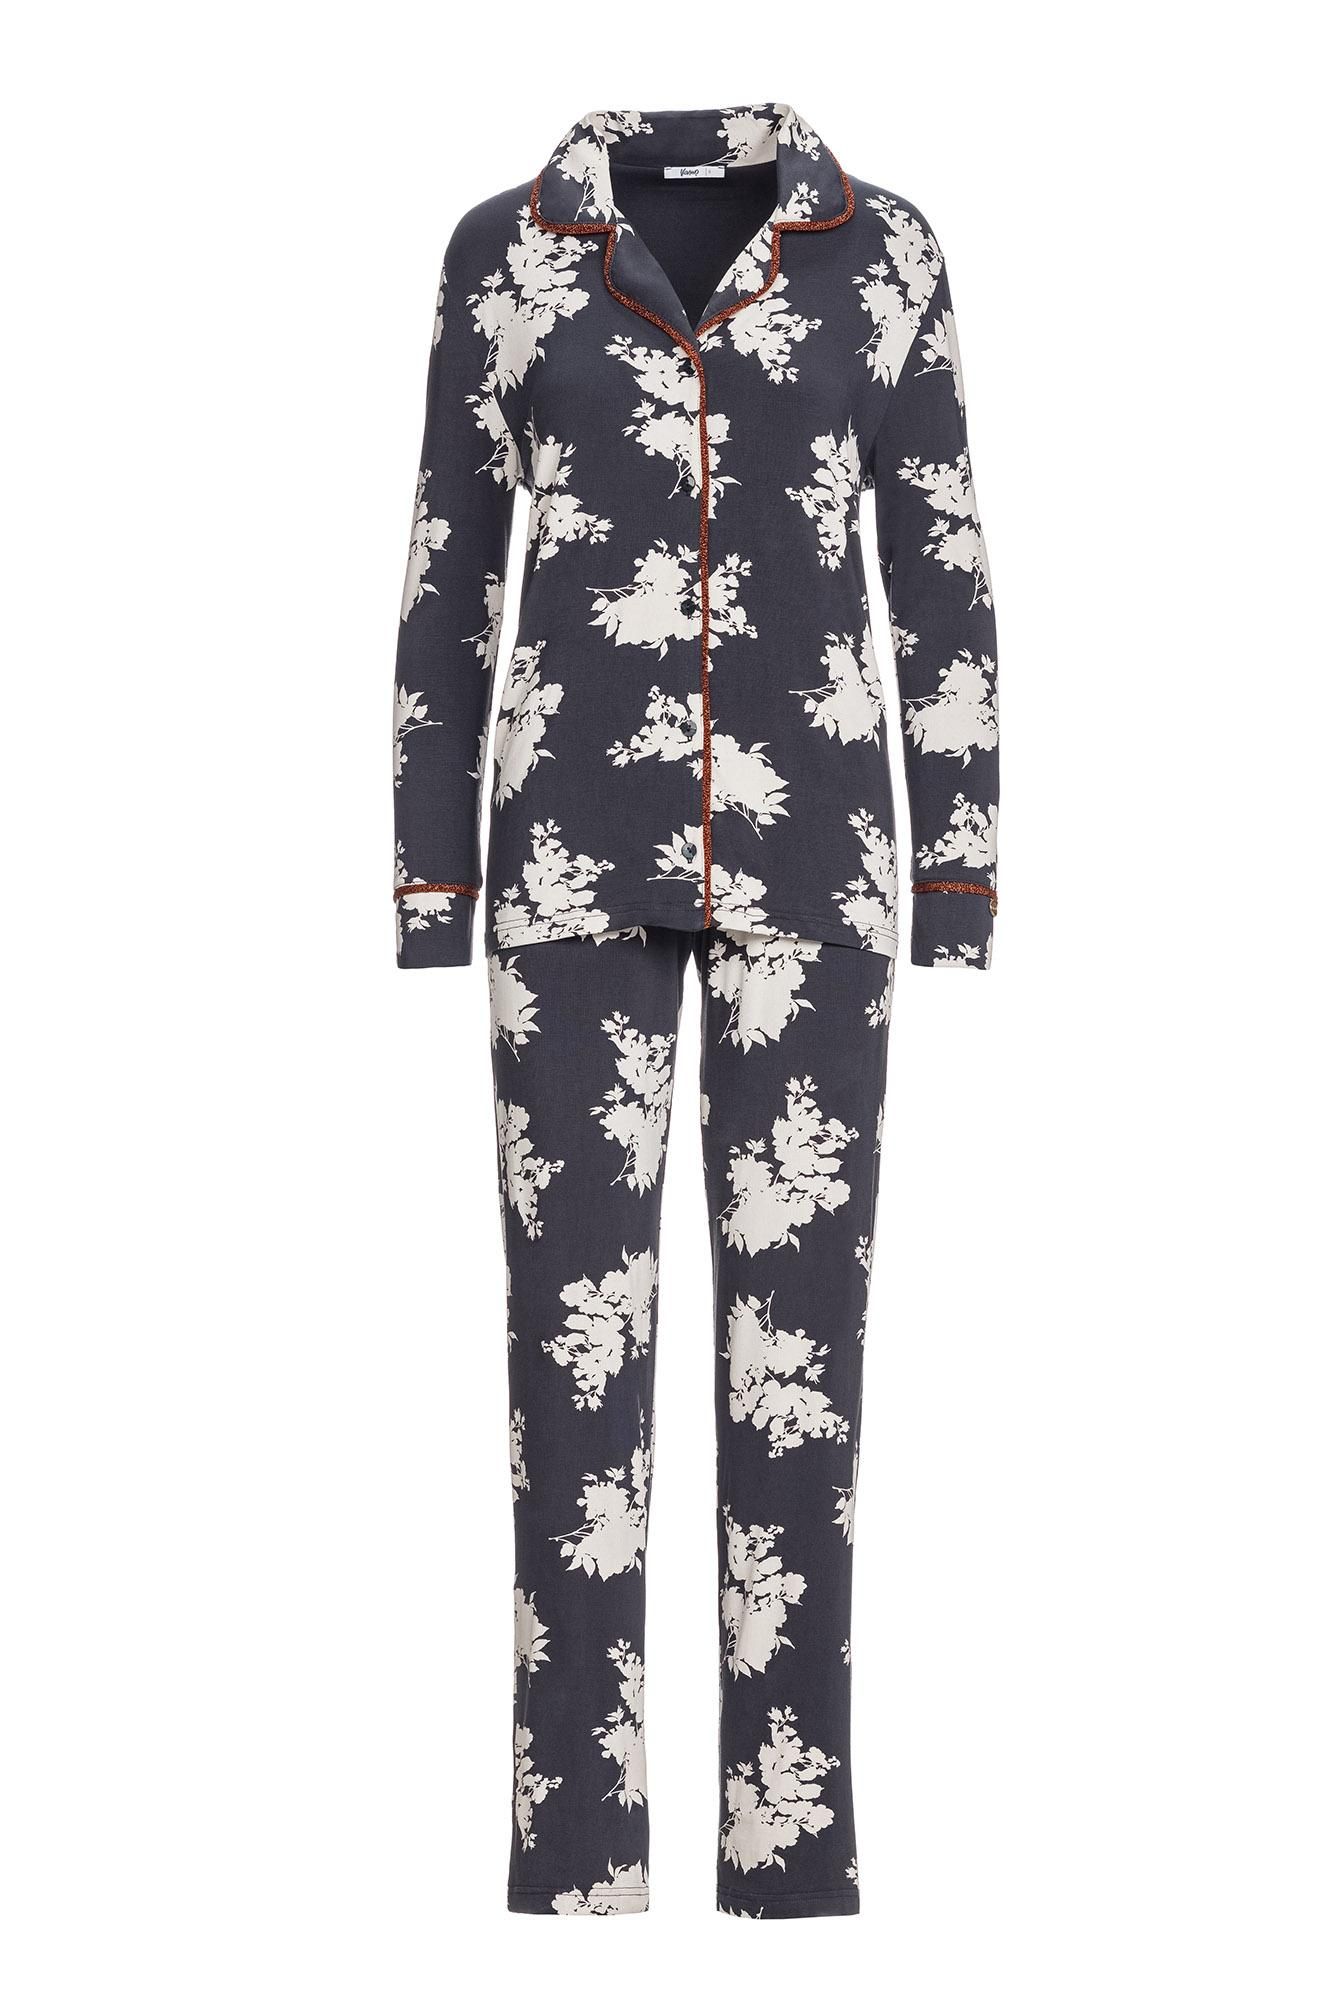 Women’s Floral Buttoned Pyjamas